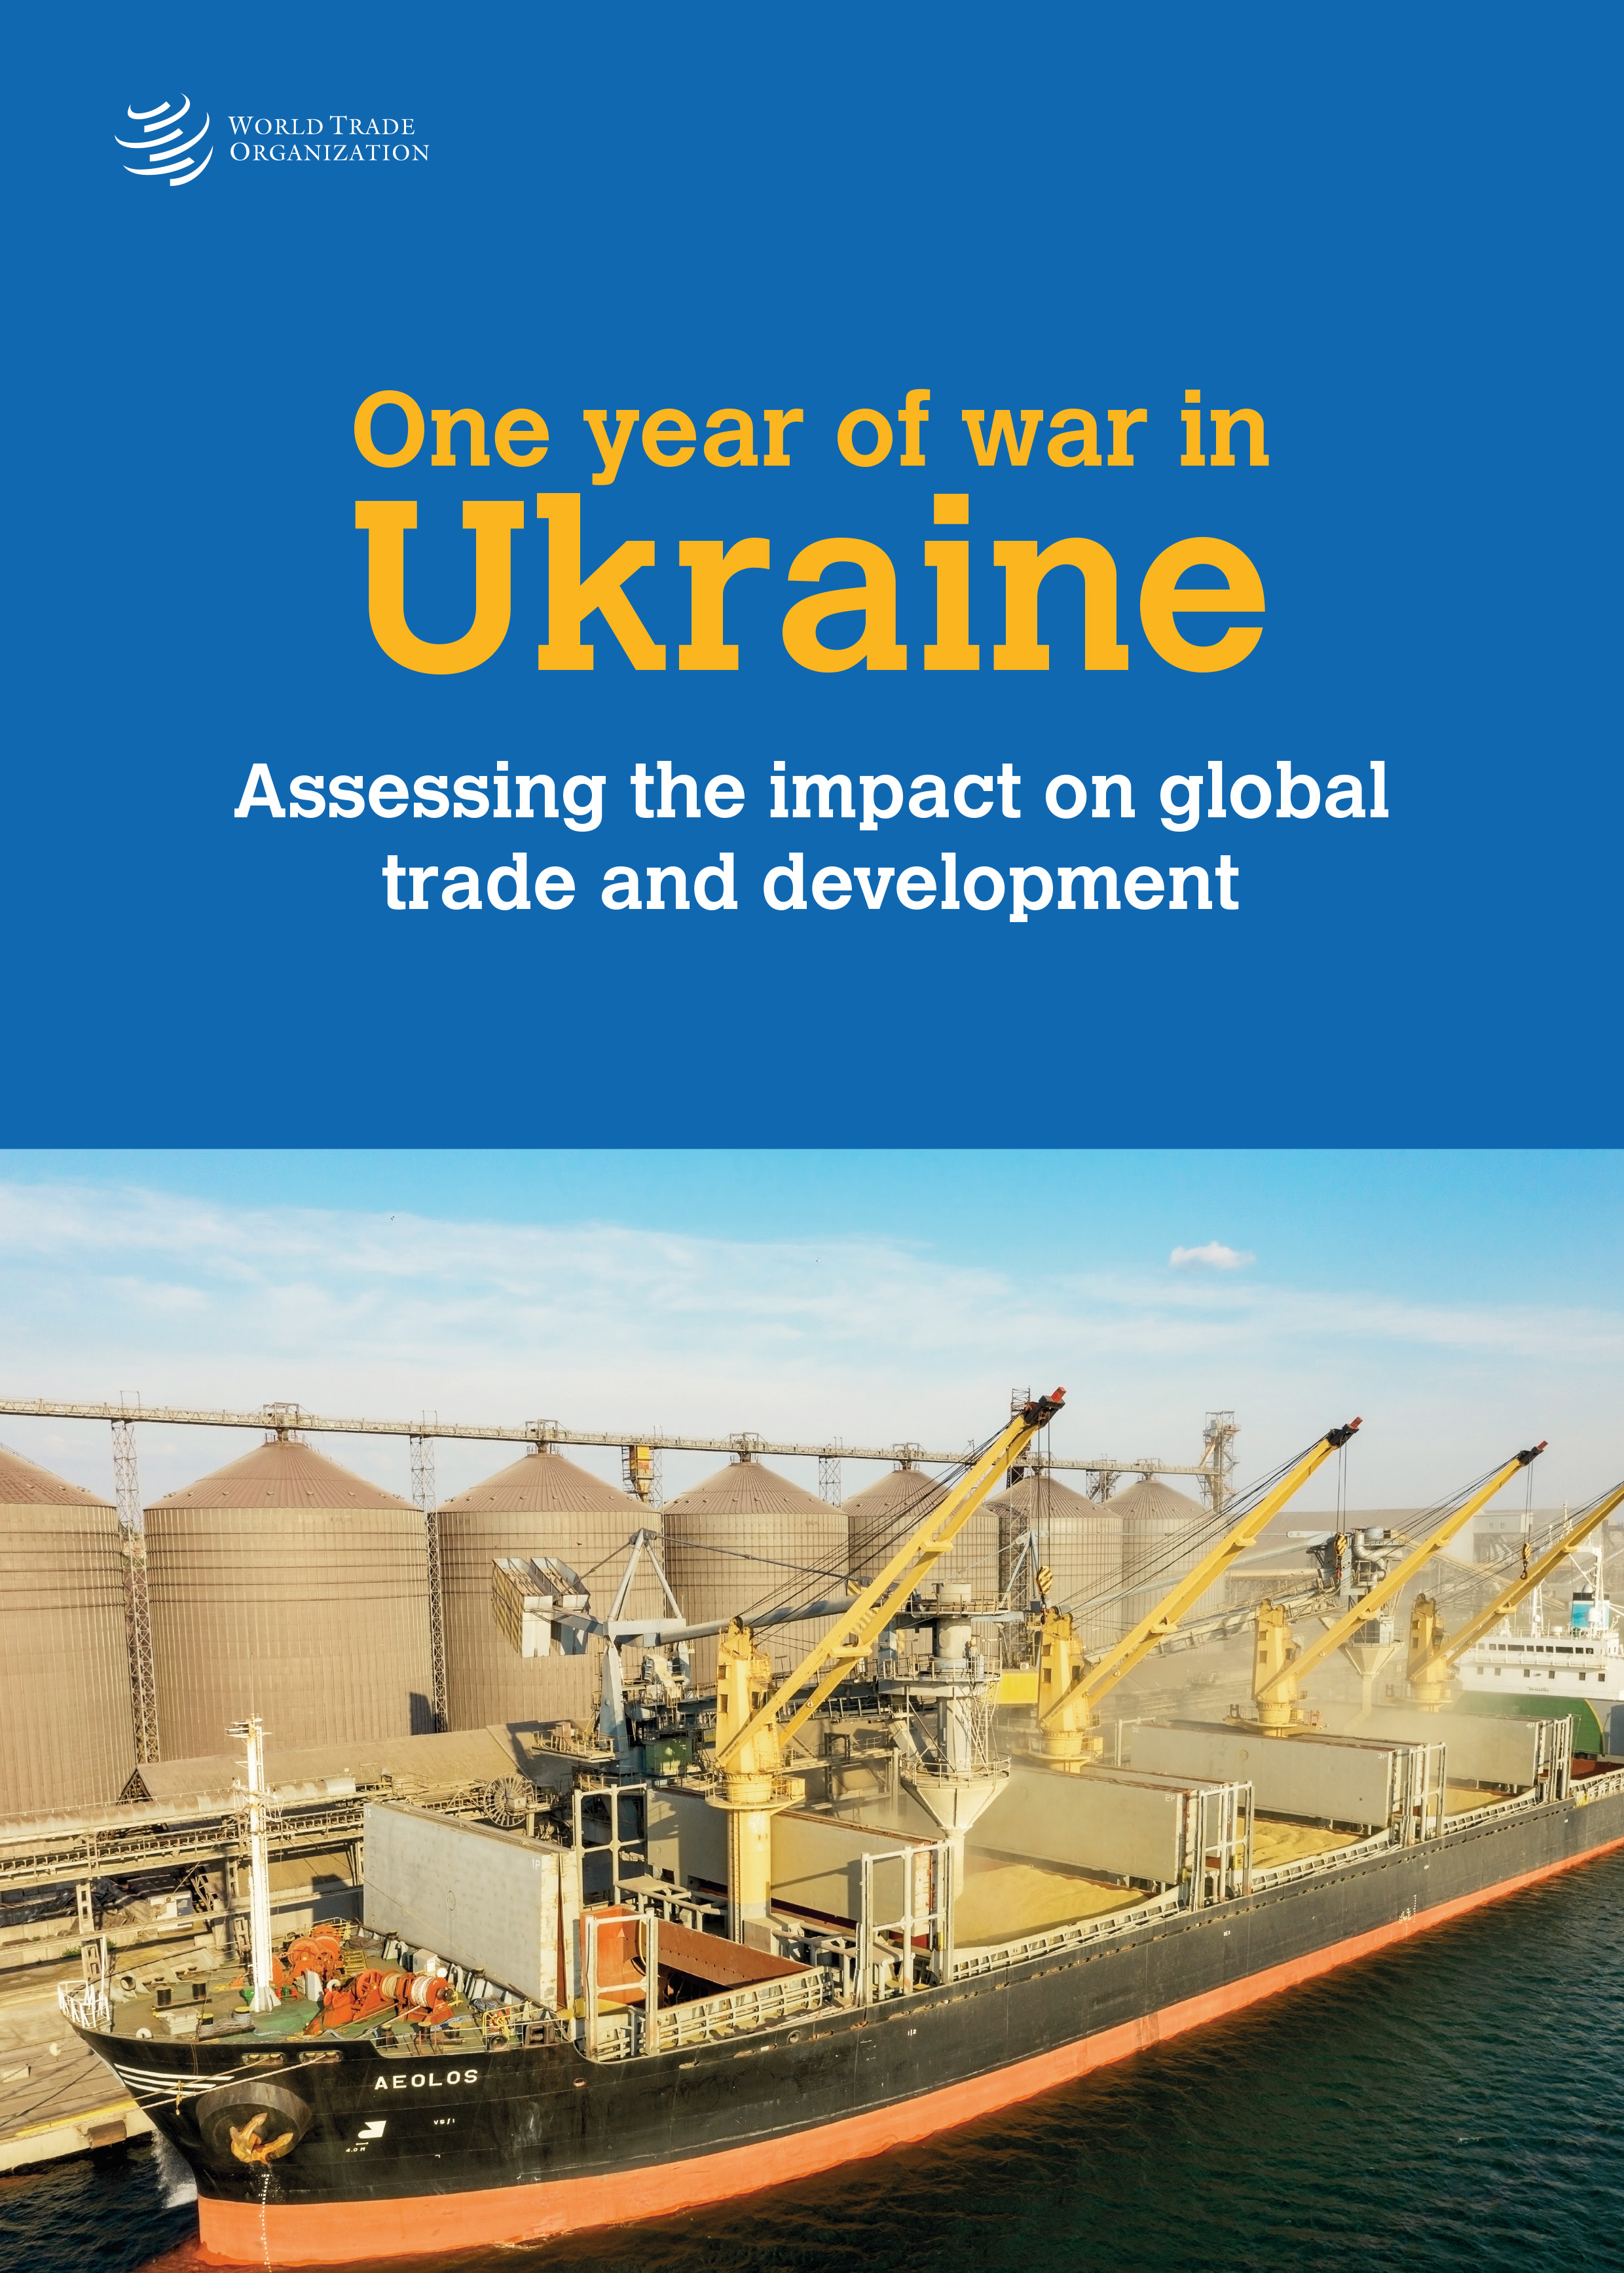 image of One year of war in Ukraine